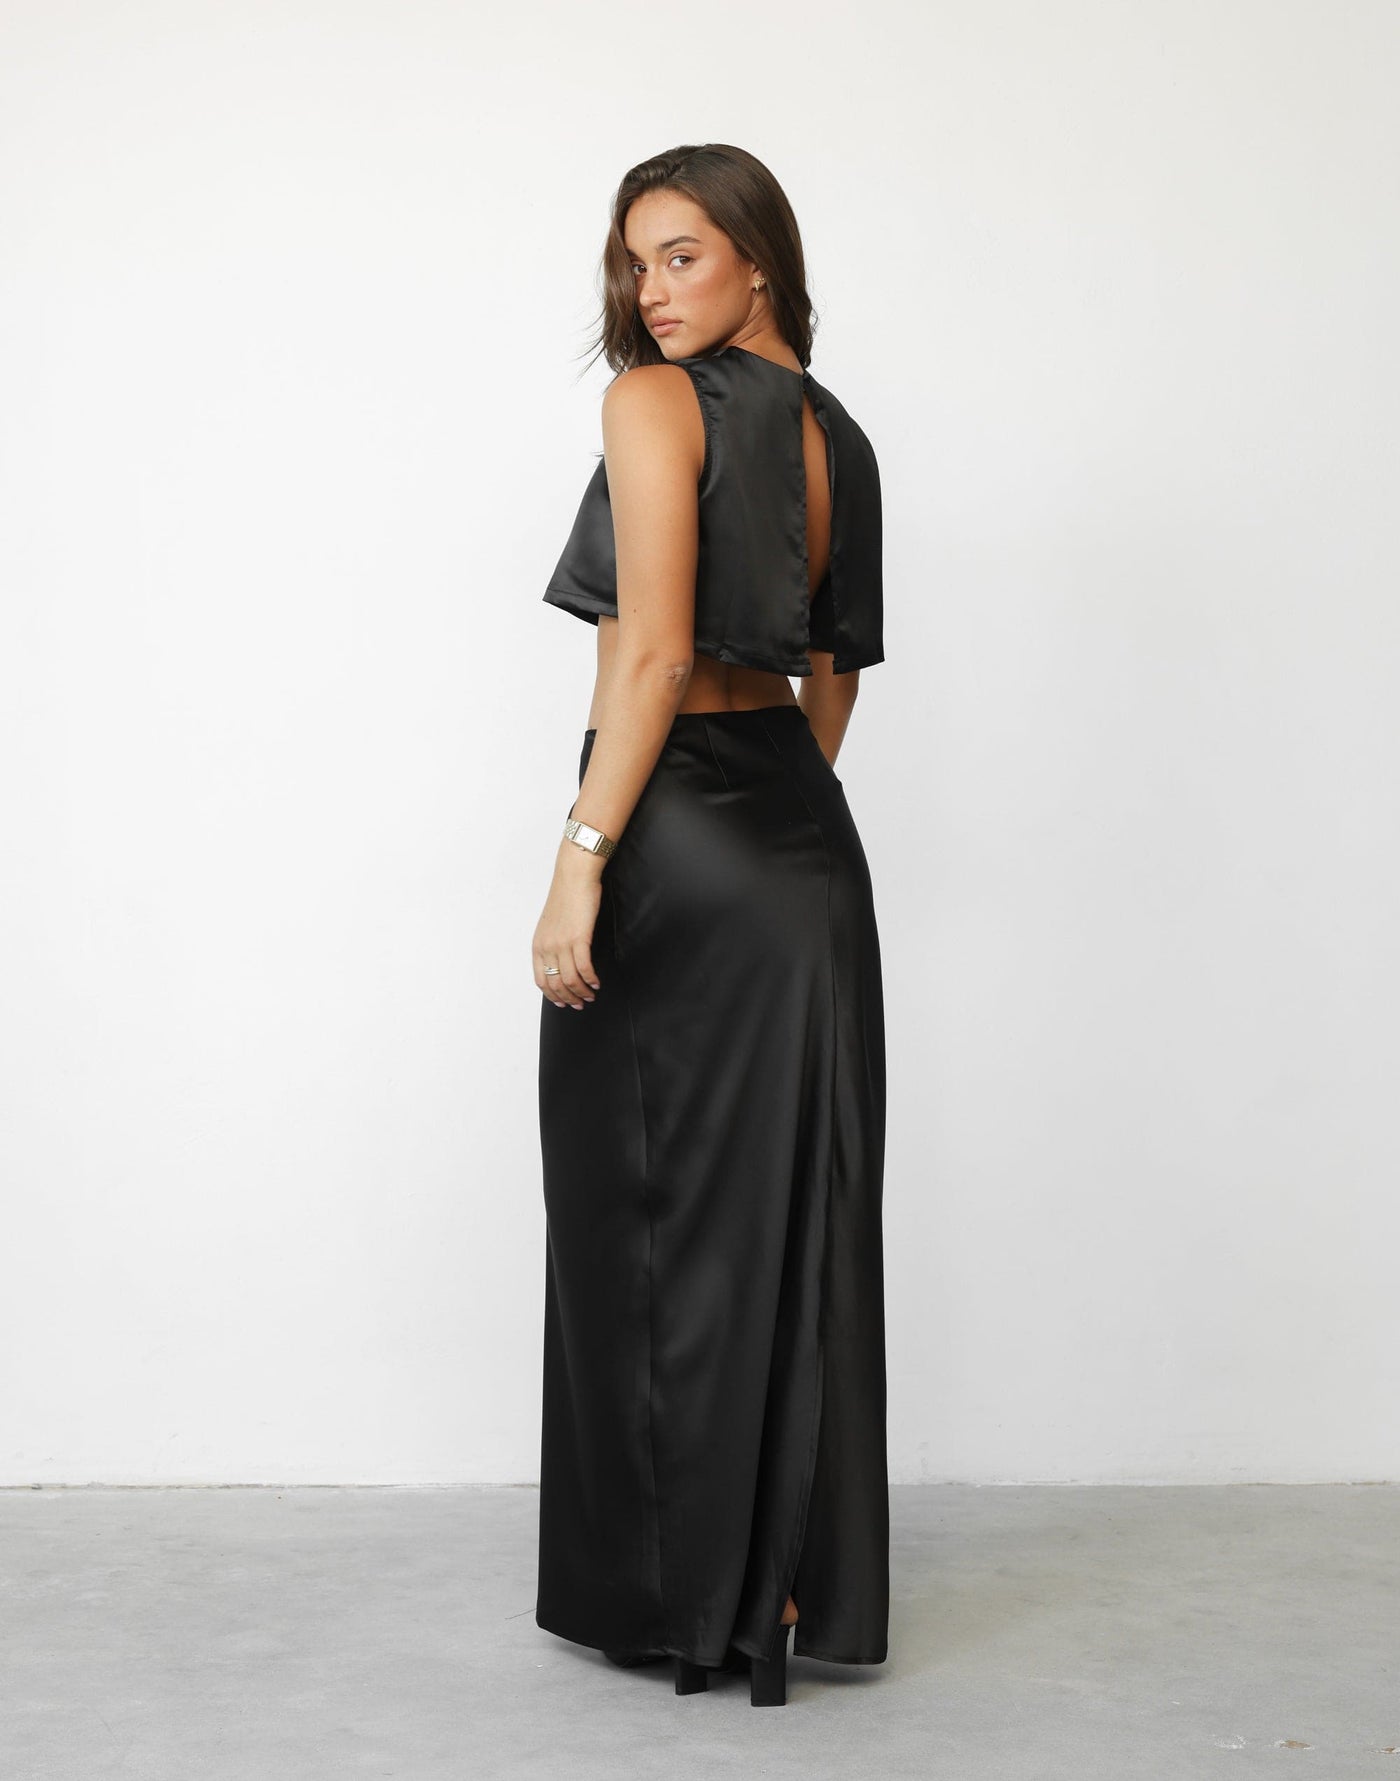 Sincerity Crop Top (Black) - Black Satin Sleeveless Open Back Crop Top - Women's Top - Charcoal Clothing